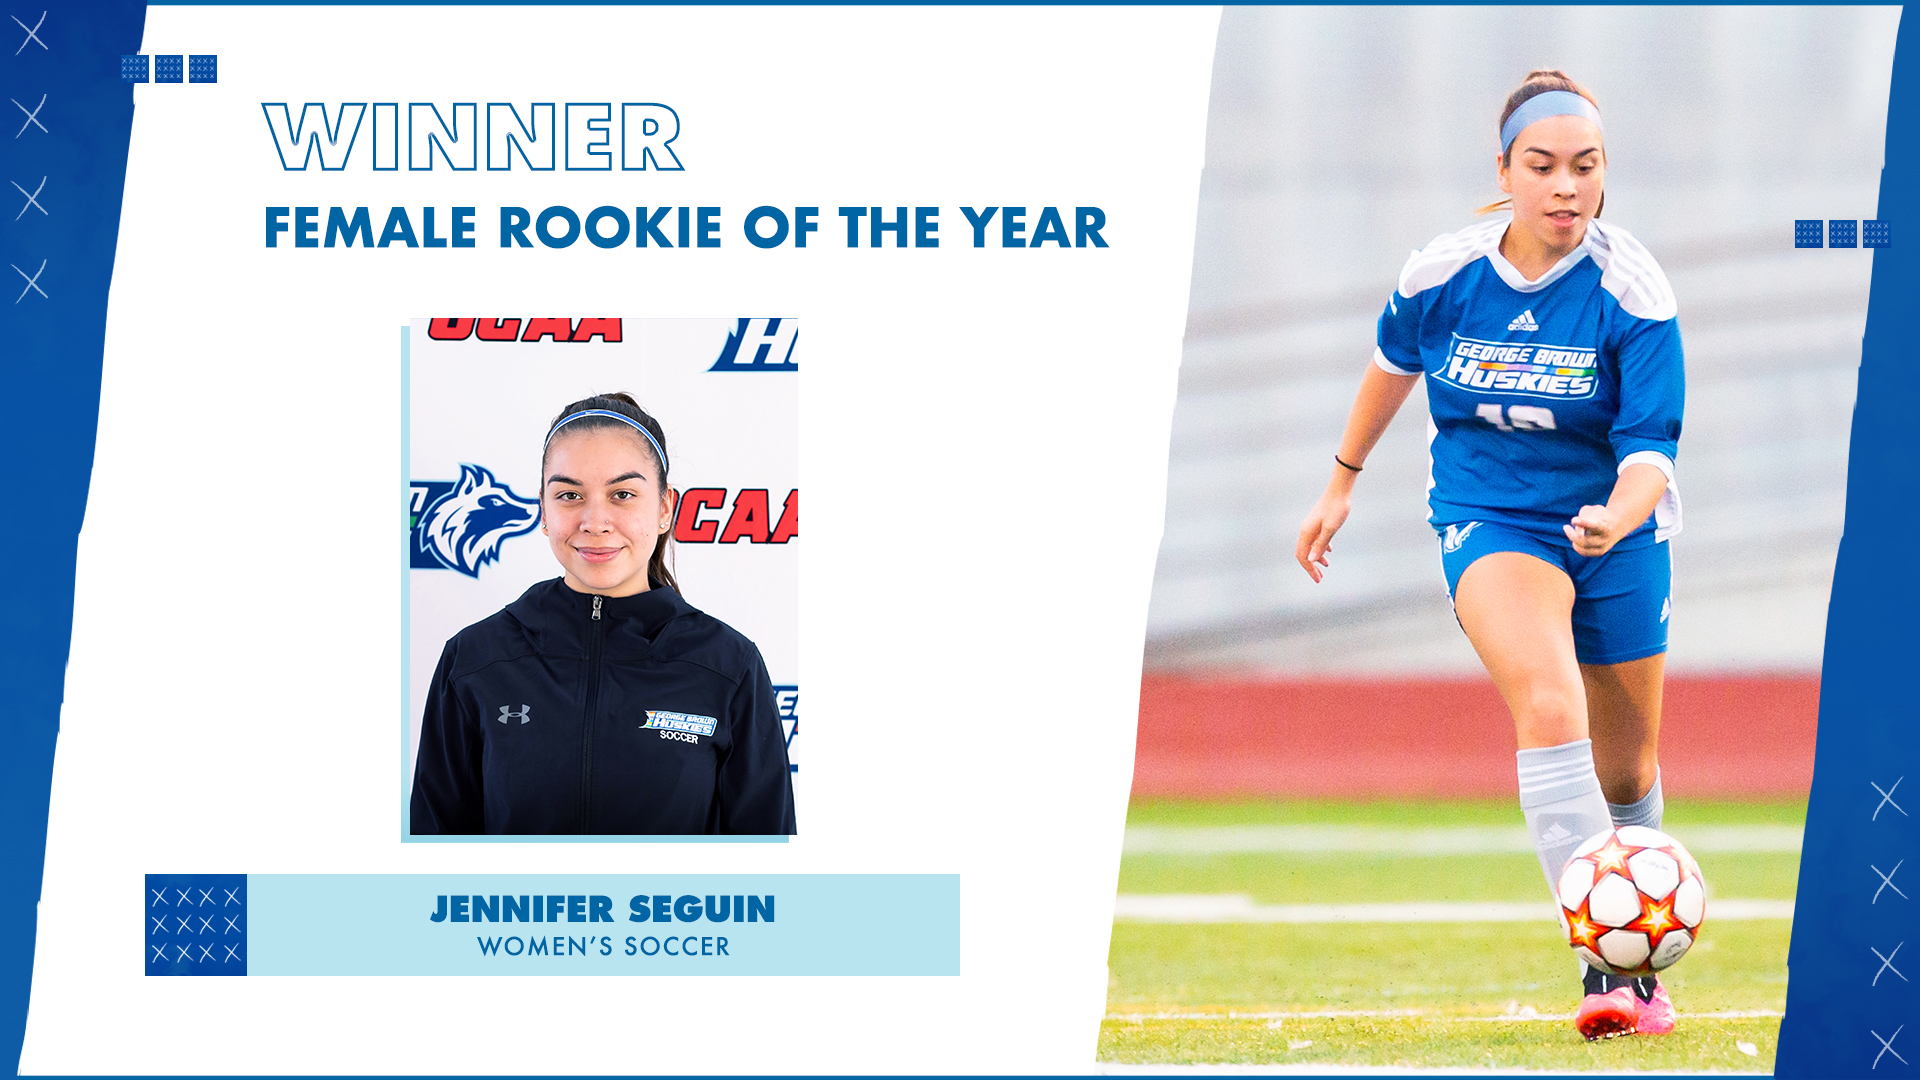 winnerfemale rookie of the yearwomens soccer Jennifer Seguin